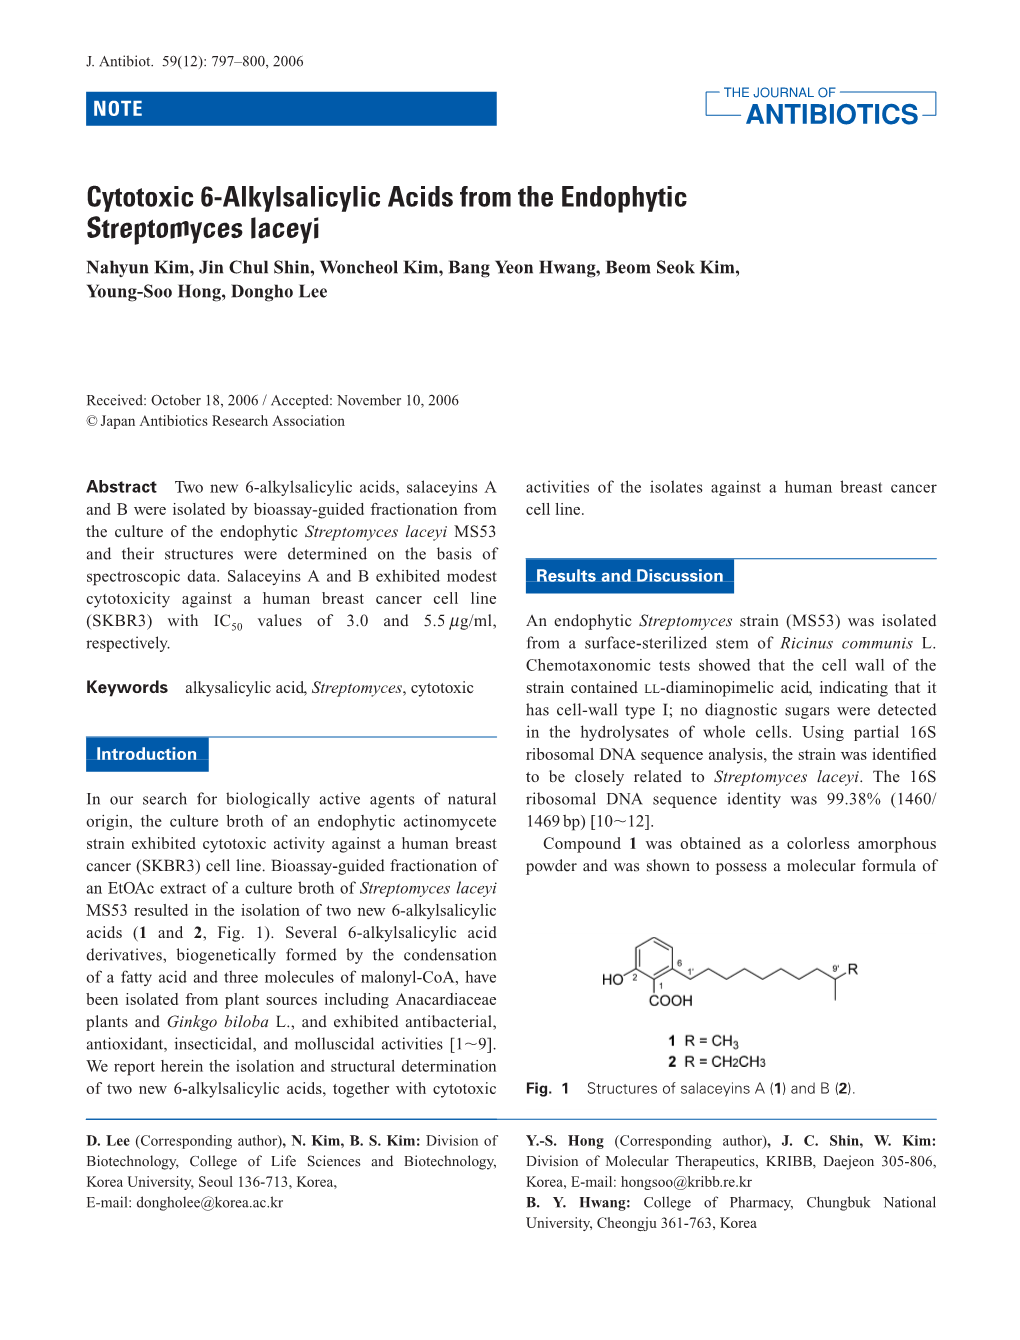 Cytotoxic 6-Alkylsalicylic Acids from the Endophytic Streptomyces Laceyi